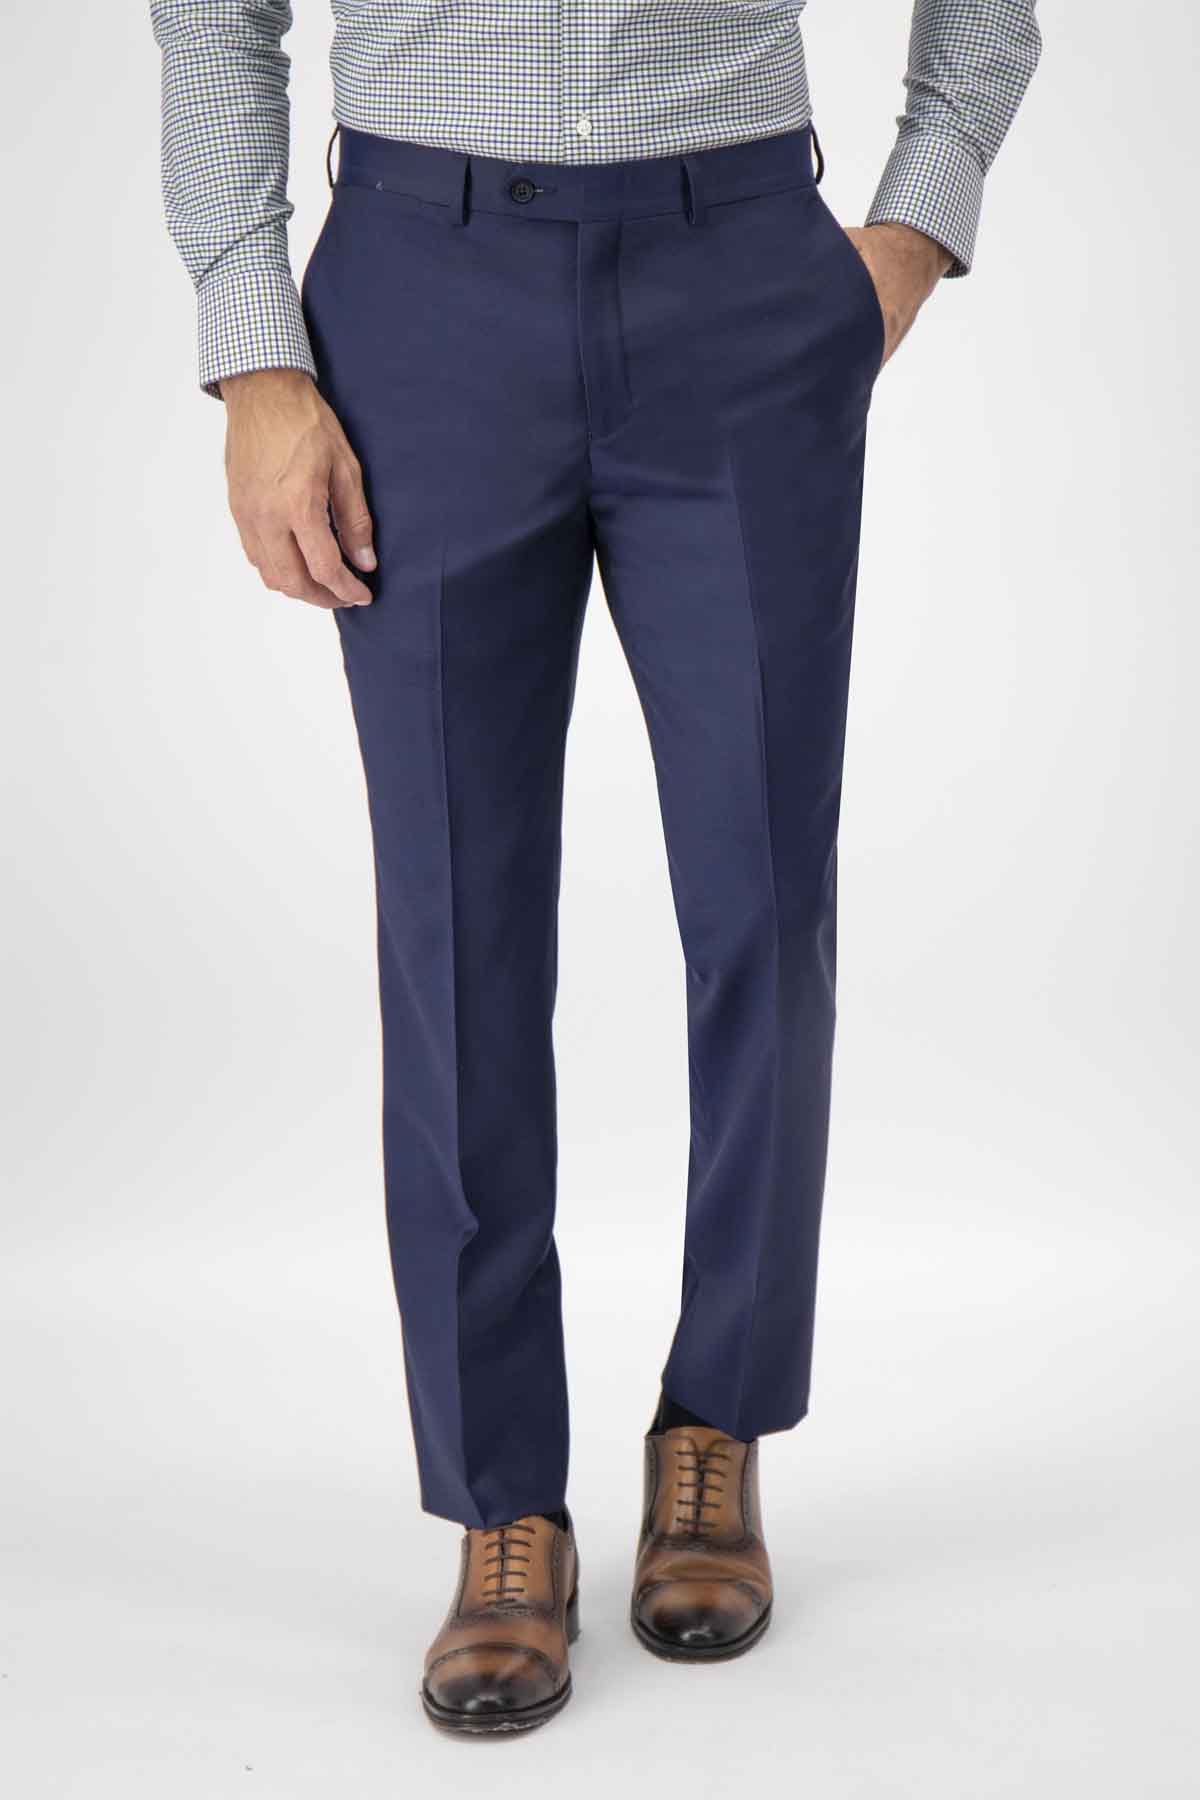 Pantalon Calderoni Contemporary fit color azul marino